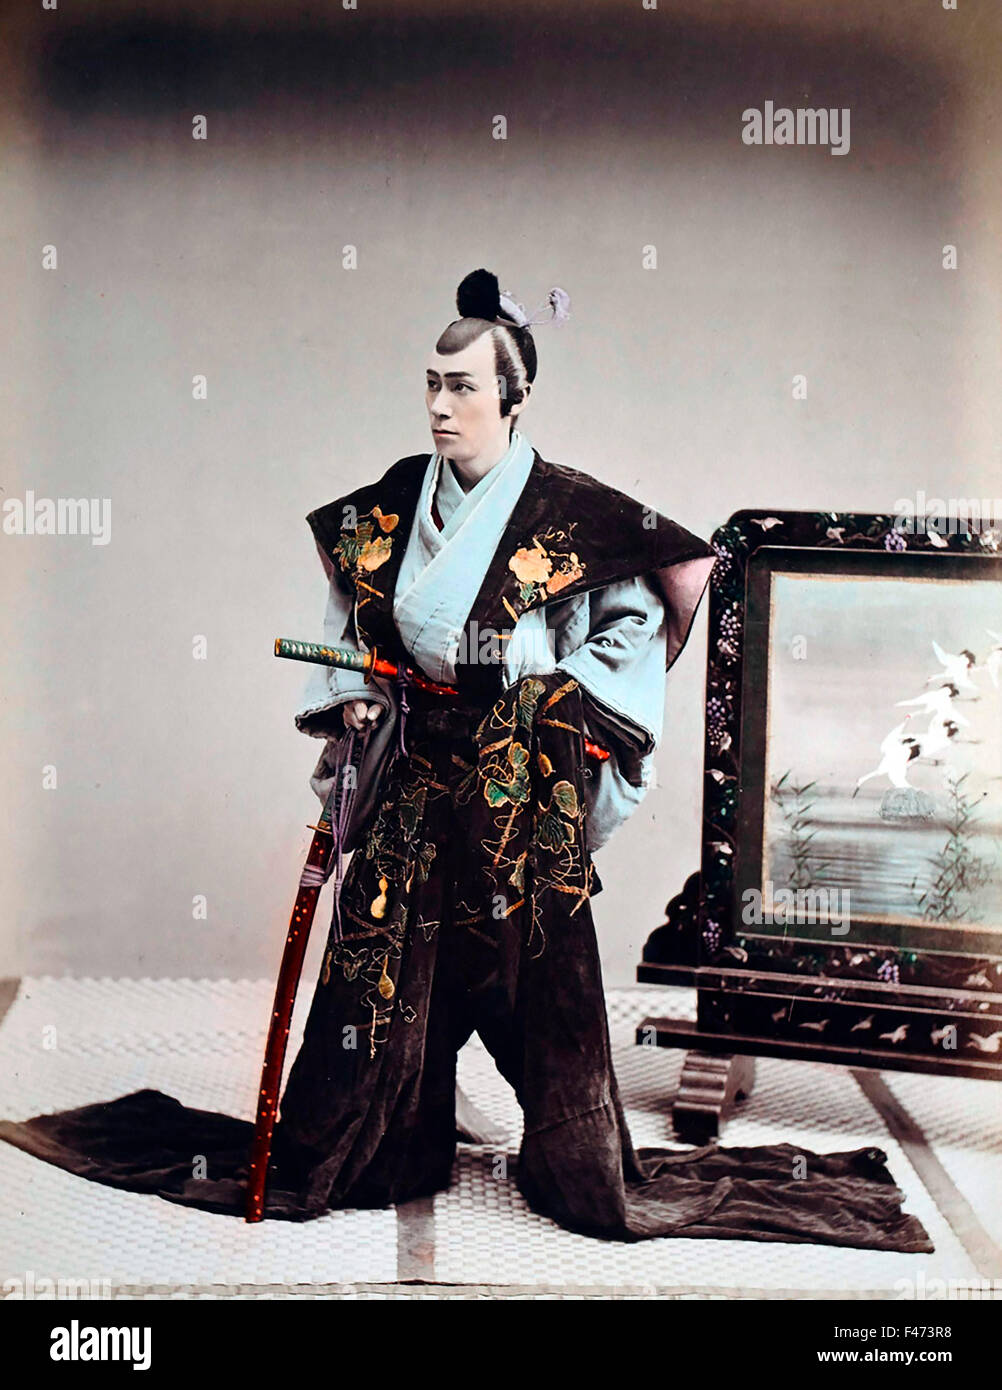 Samurai with sword, Japan Stock Photo